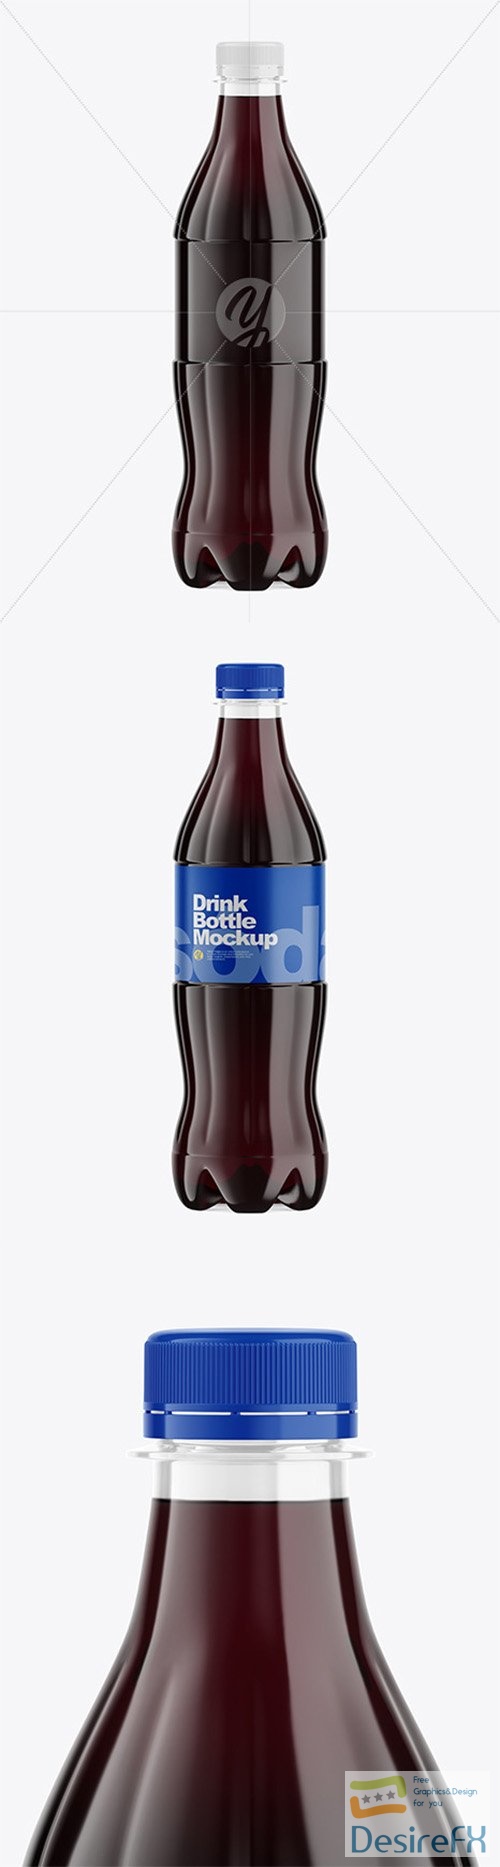 500ml Clear Plastic Dark Drink Bottle Mockup 80690 TIF